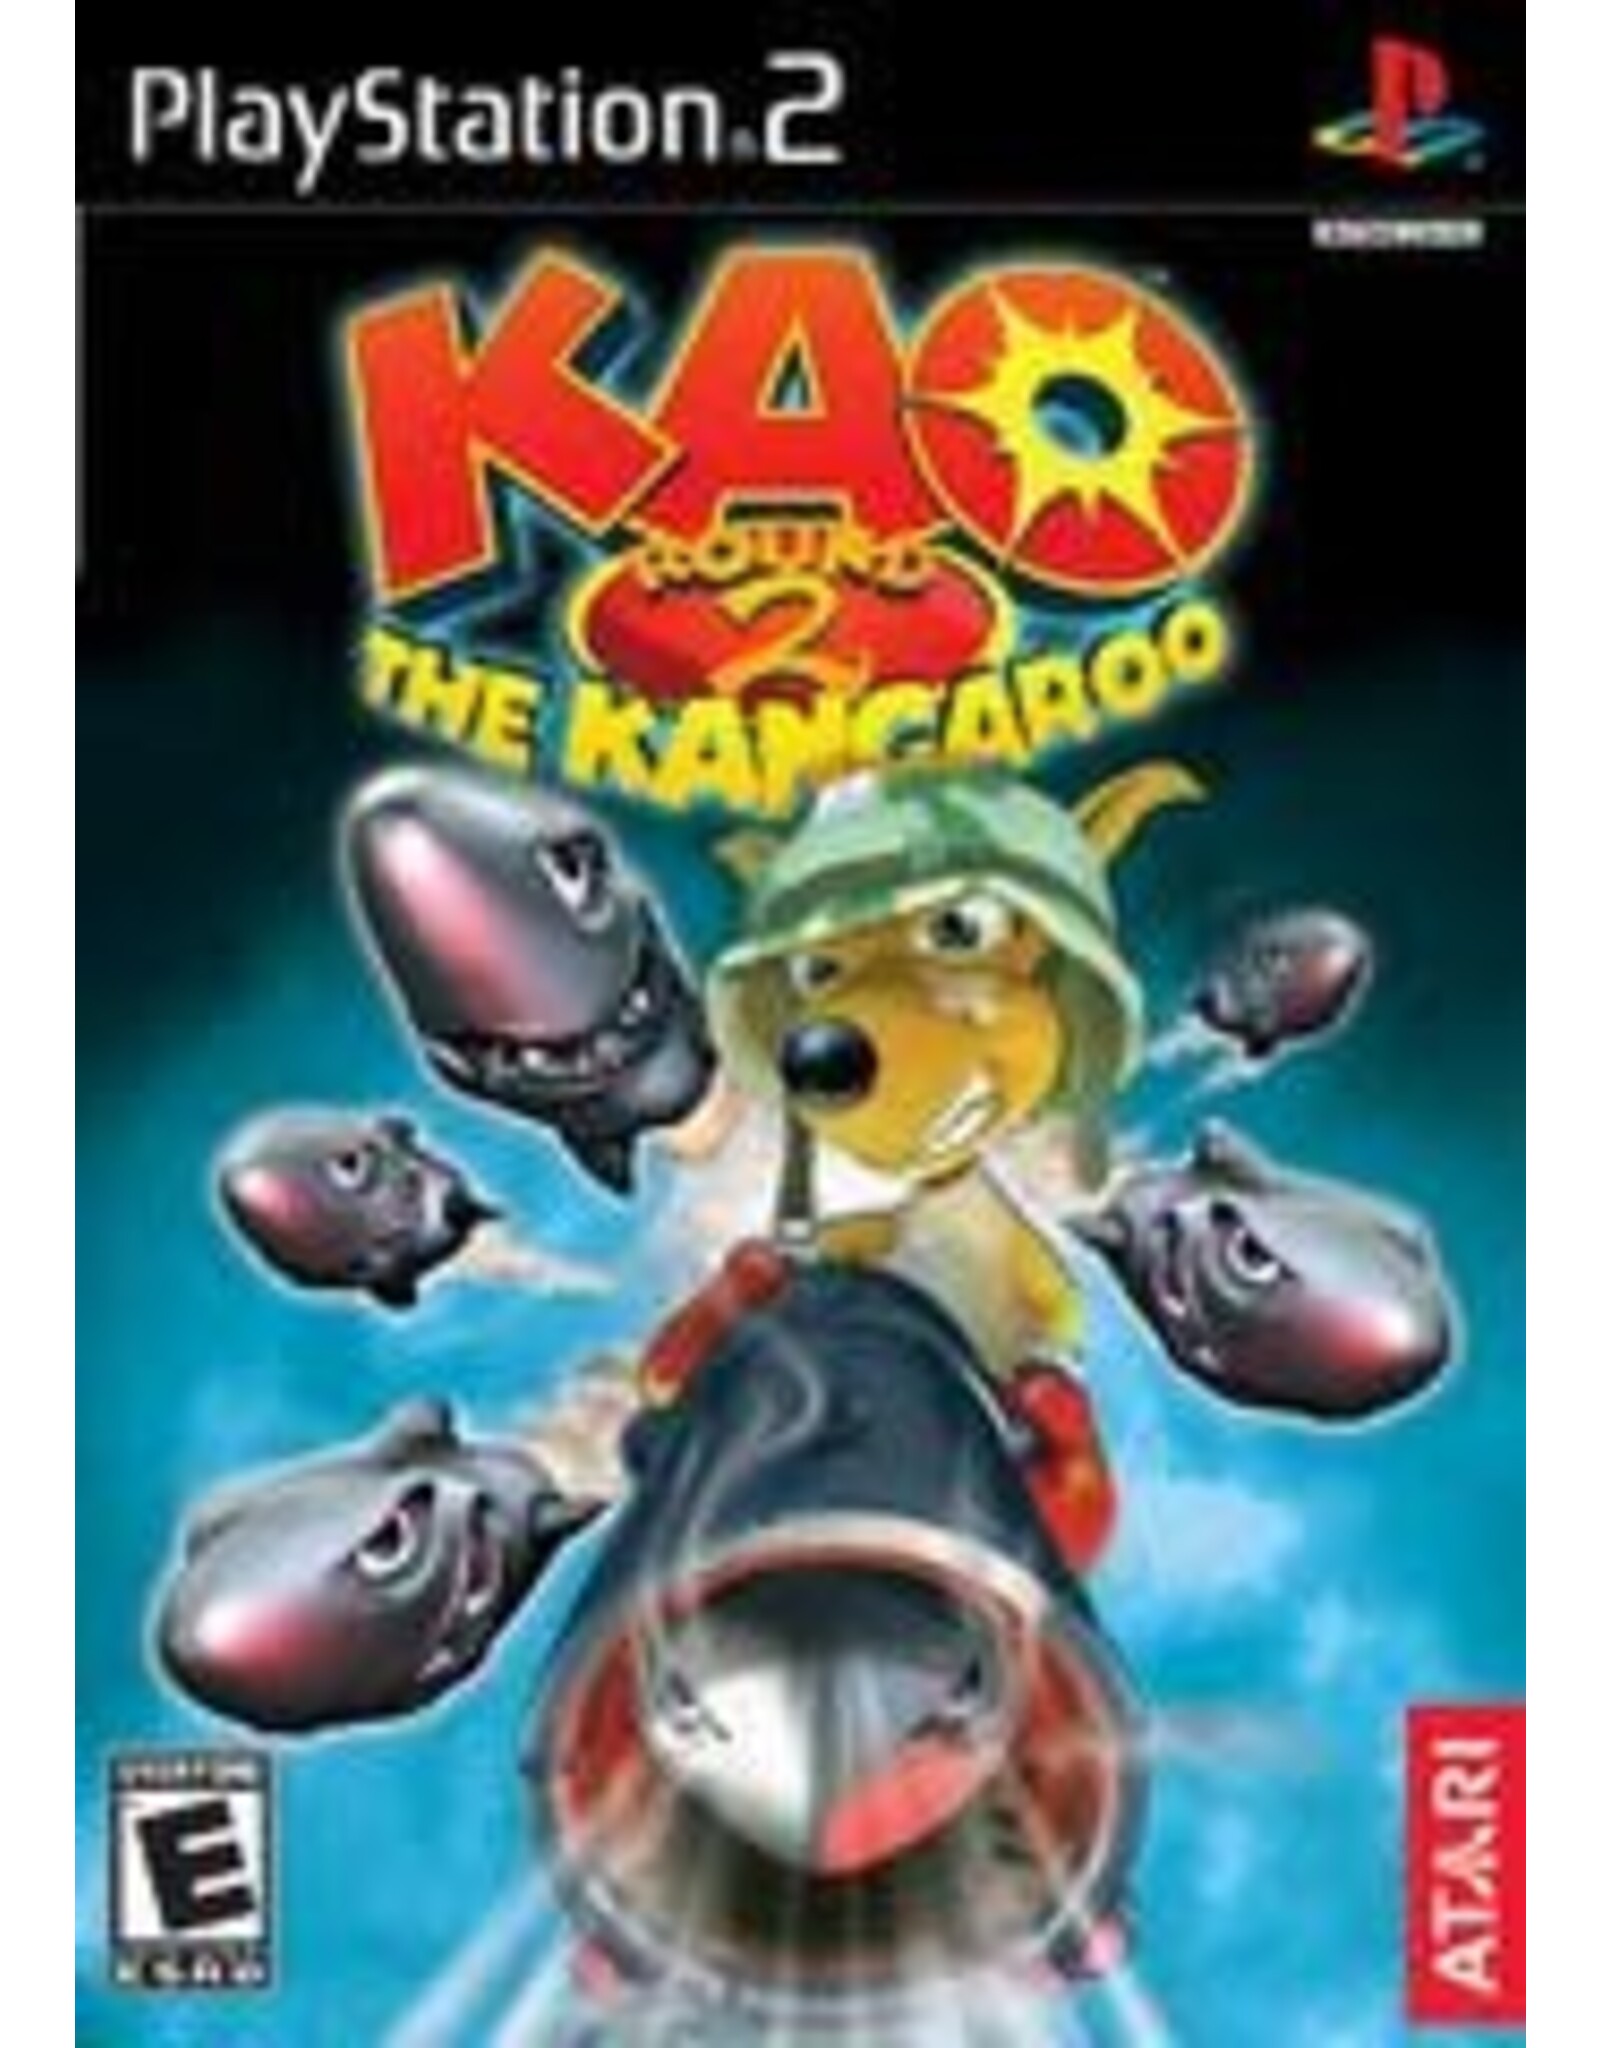 Playstation 2 Kao the Kangaroo Round 2 (CiB)